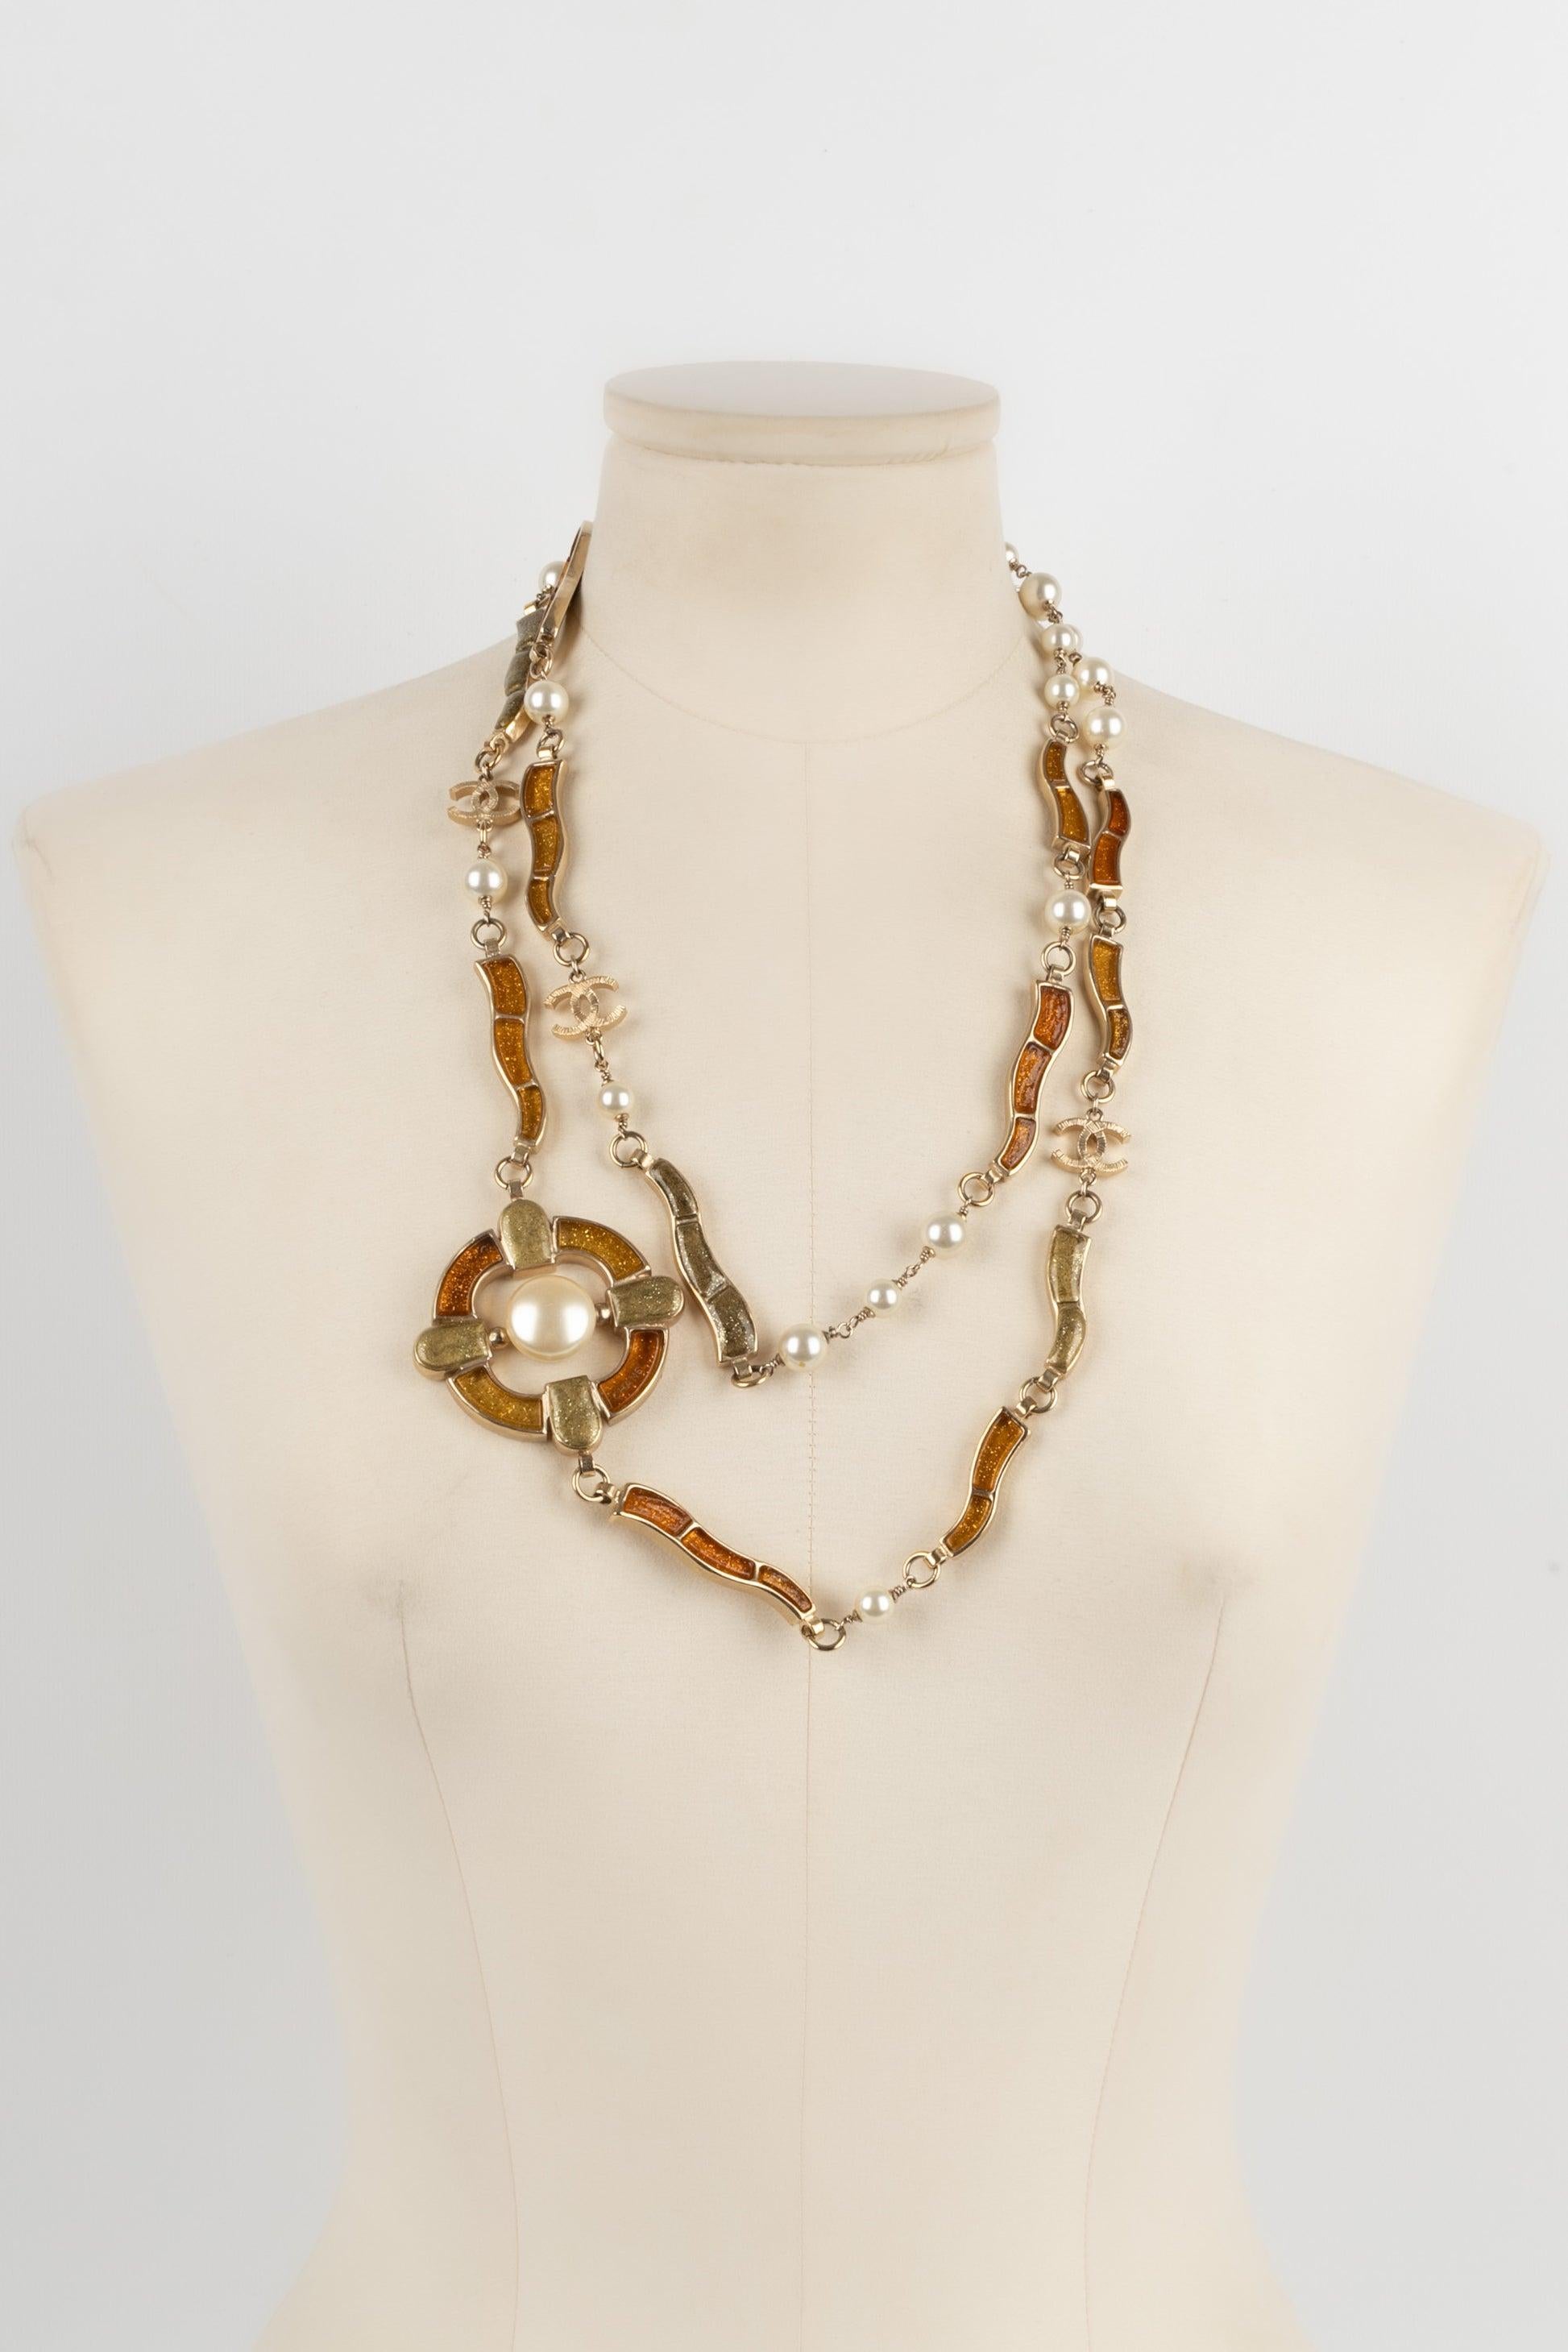 Lange Chanel-Halskette aus goldenem Metall, 2007 im Angebot 3